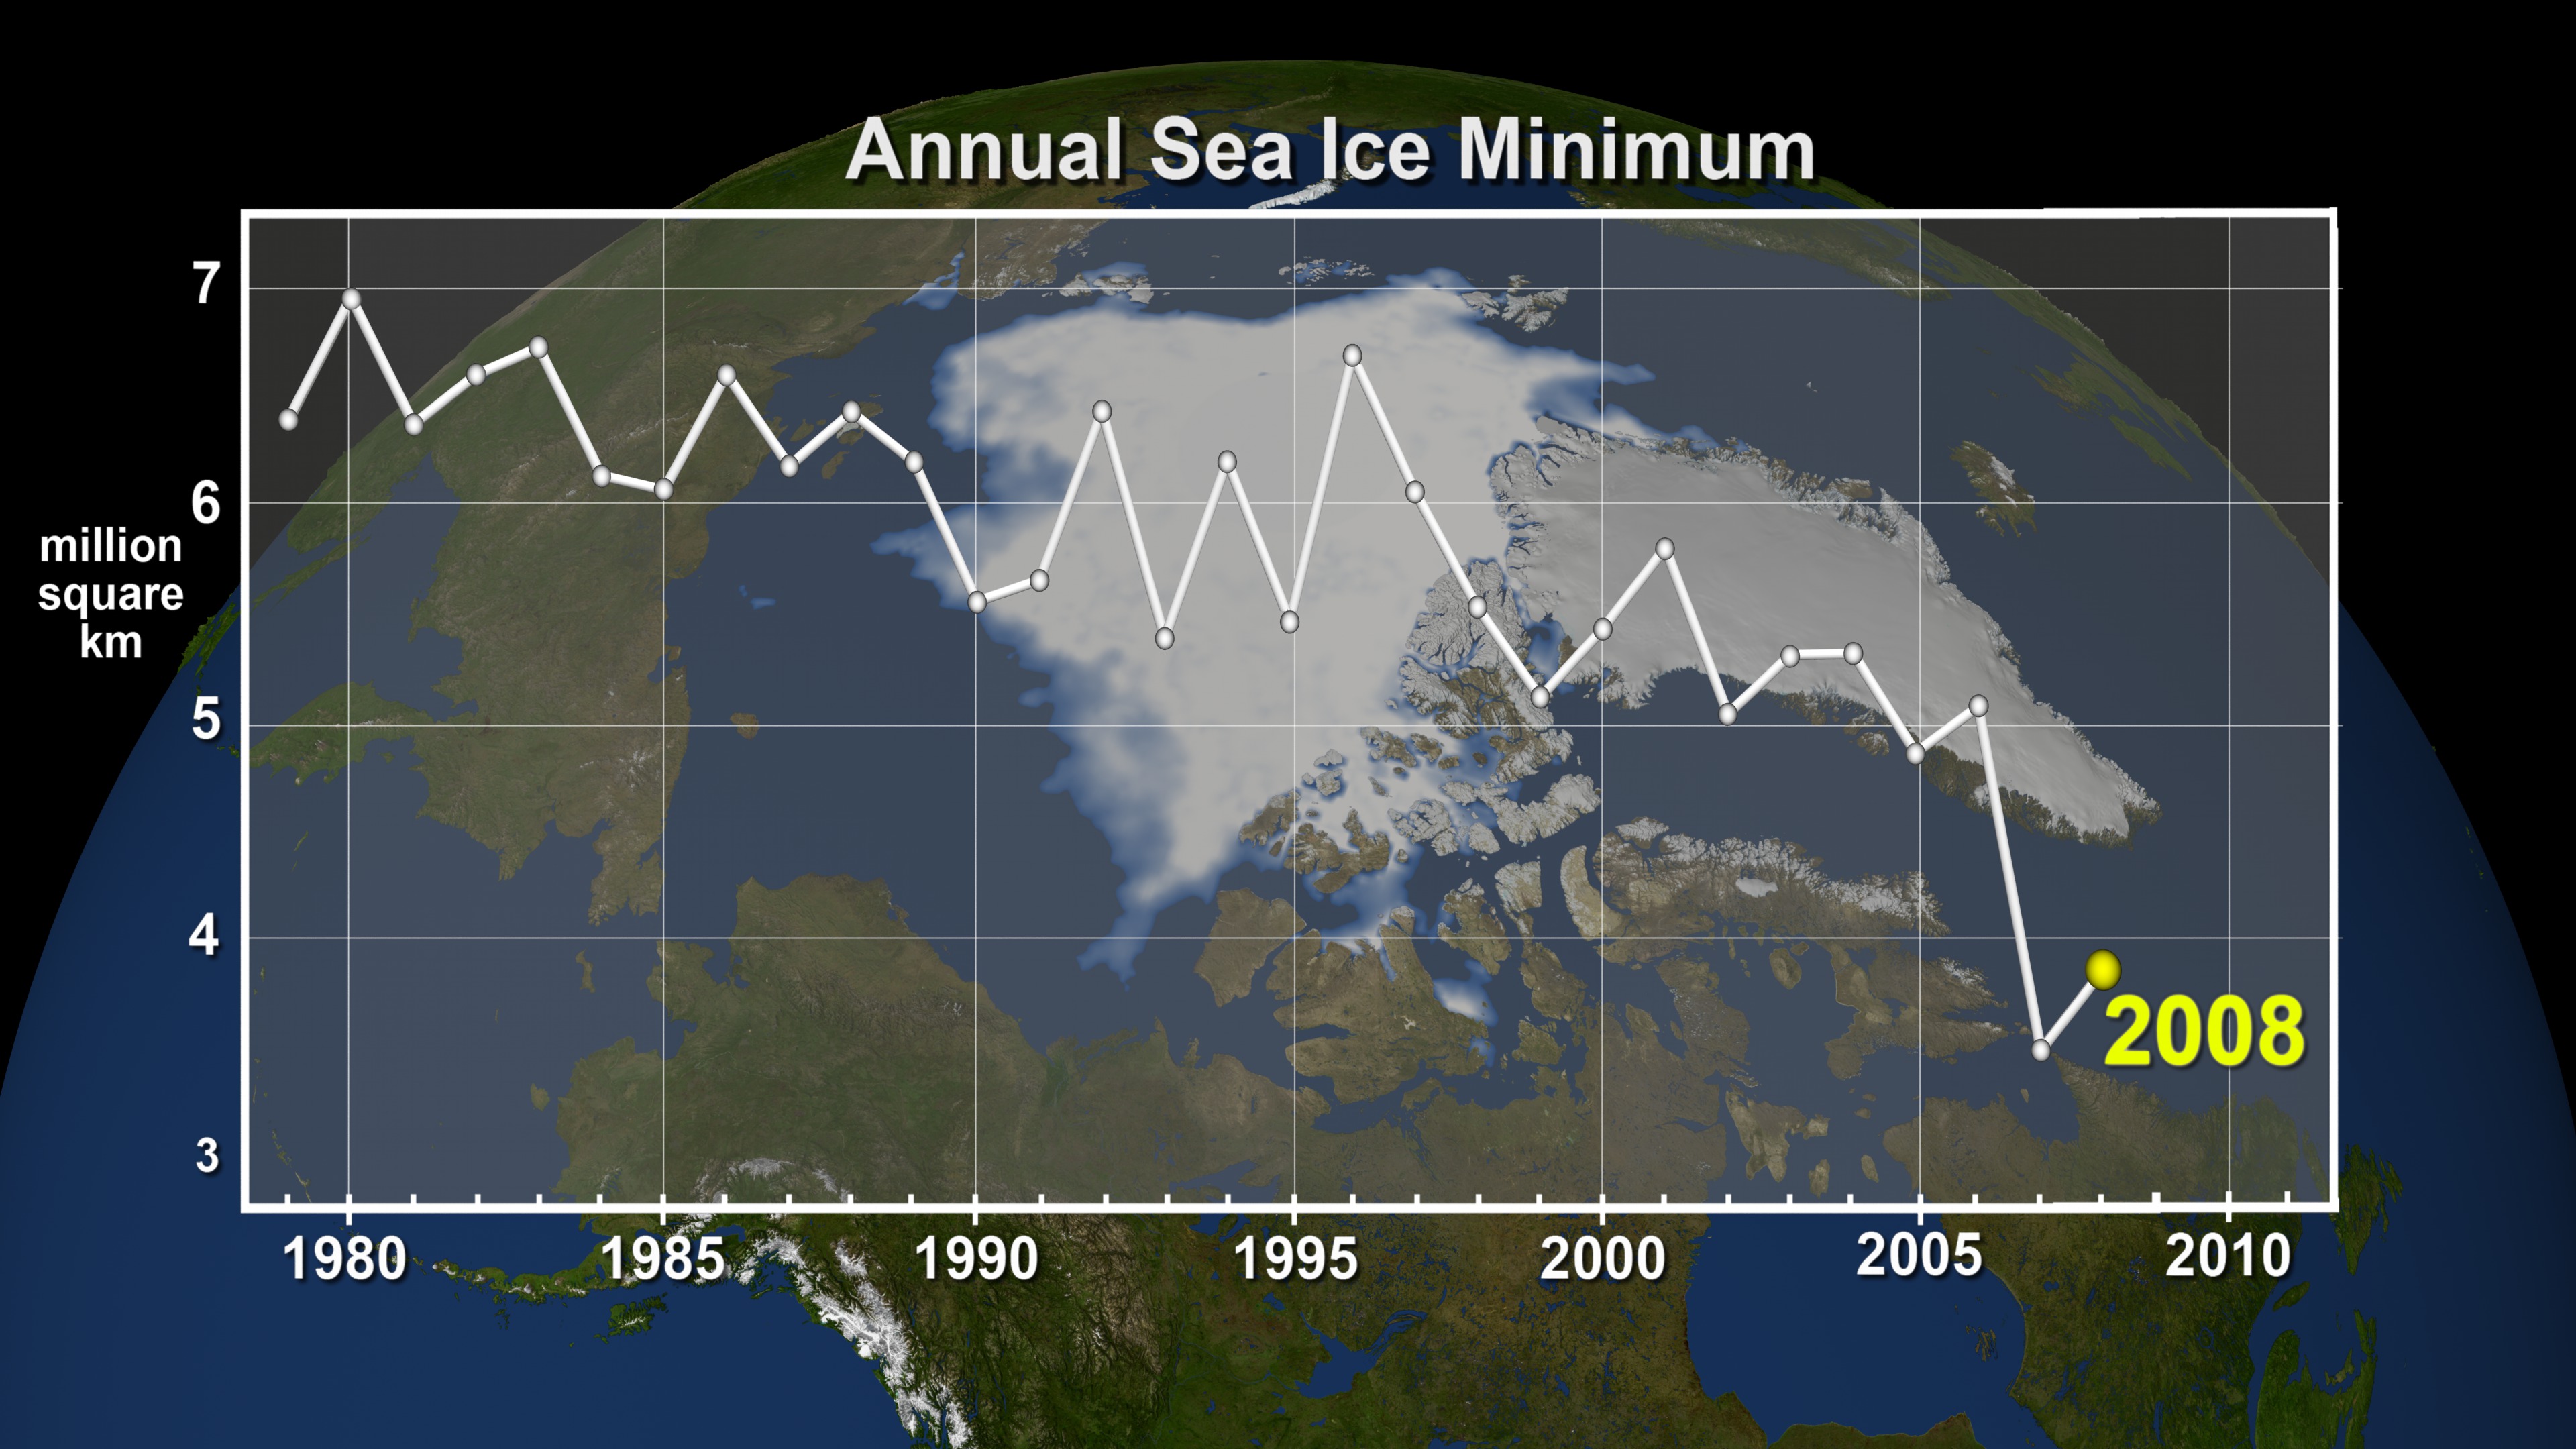 Annual Arctic Sea Ice Minimum from 1979 to 2008.